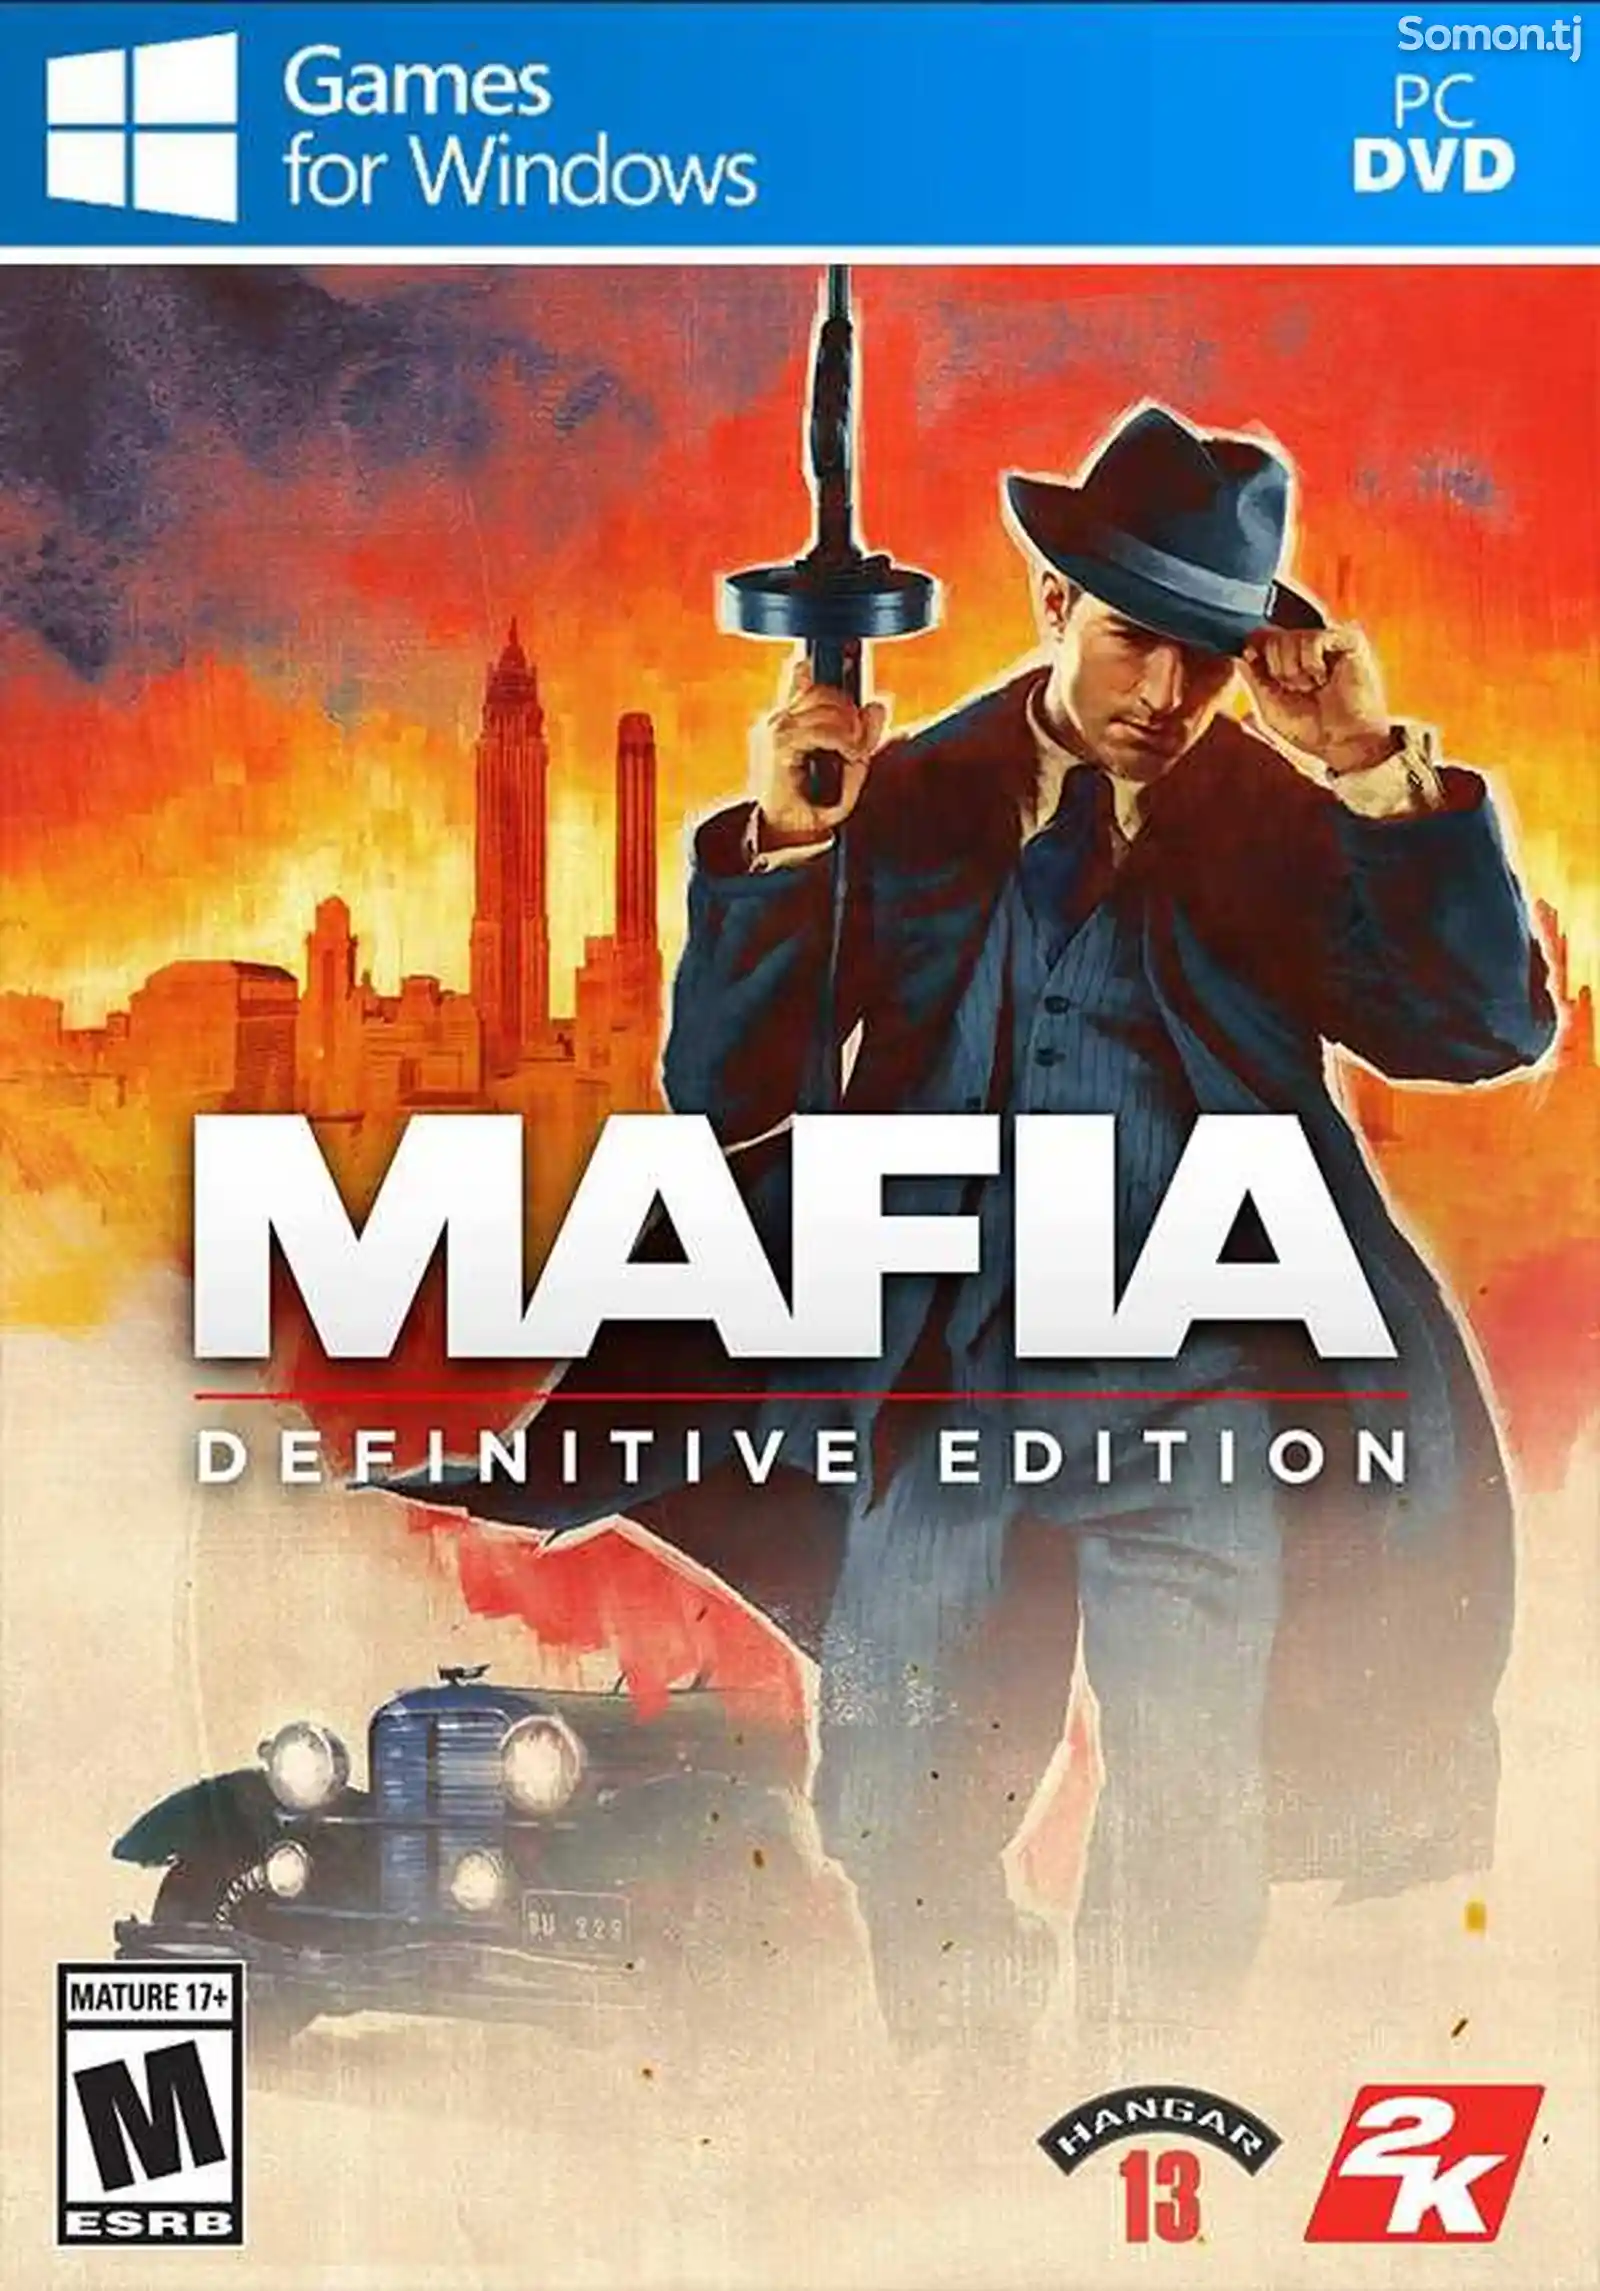 Игра Mafia-definitive edition для компьютера-пк-pc-1